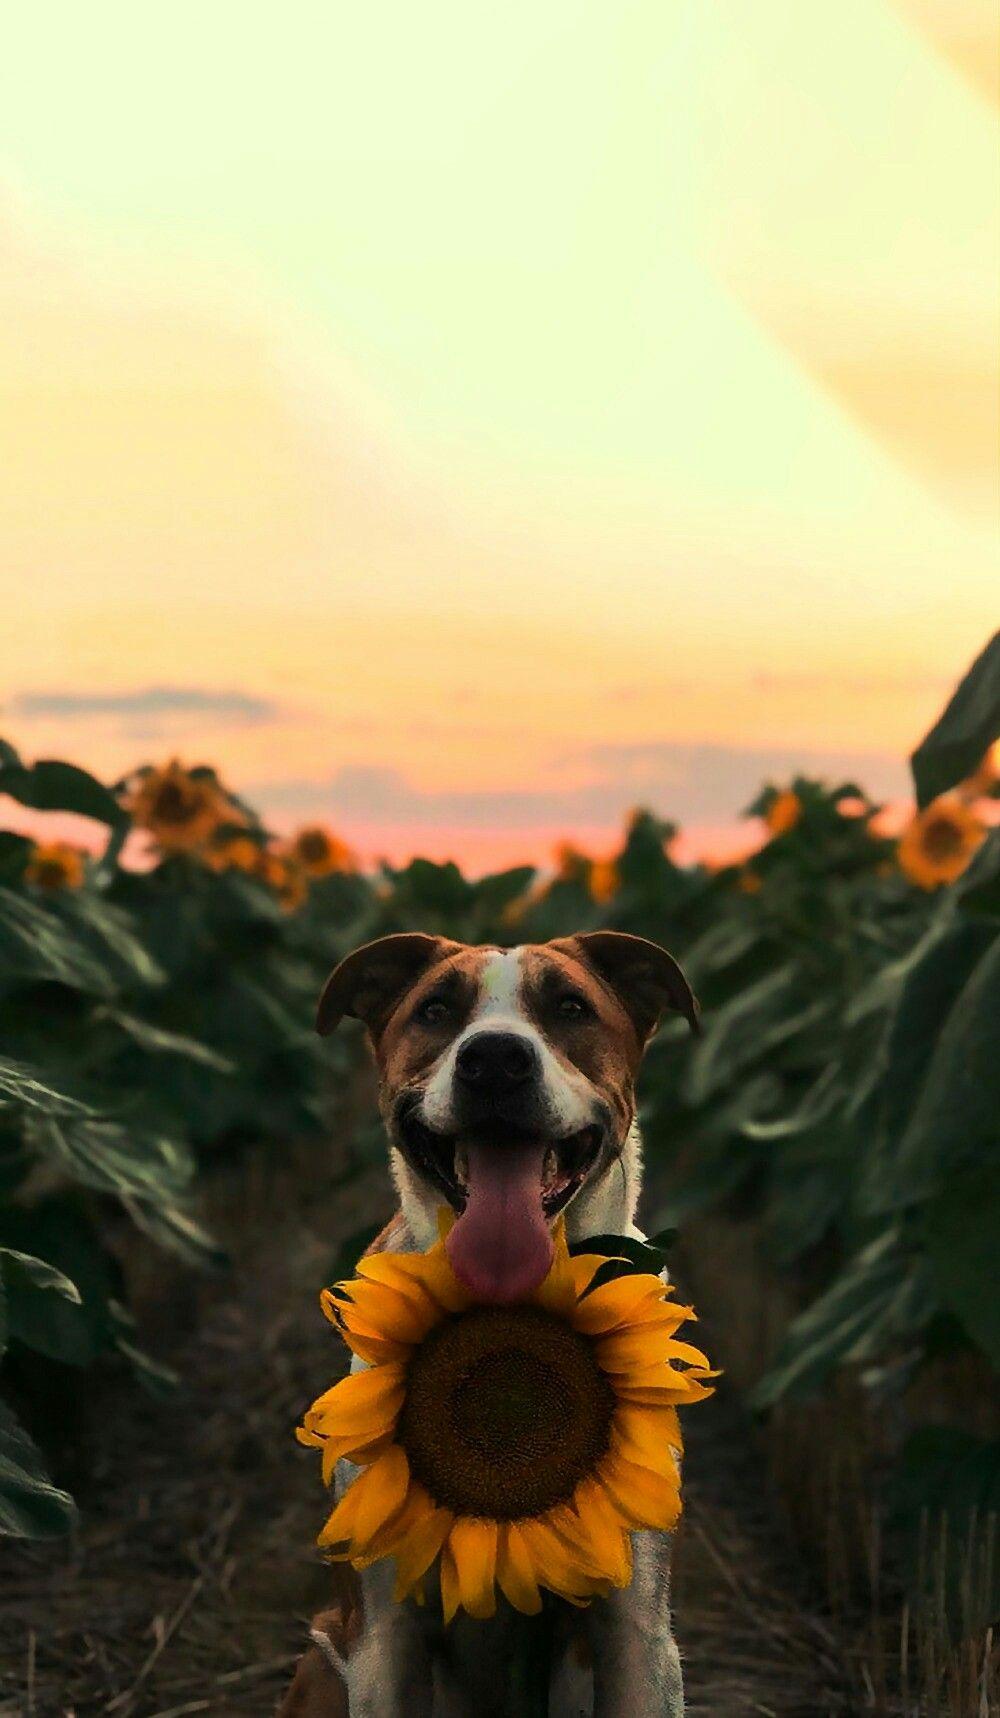 PHOTOGRAPHY. Dog wallpaper iphone, Sunflower